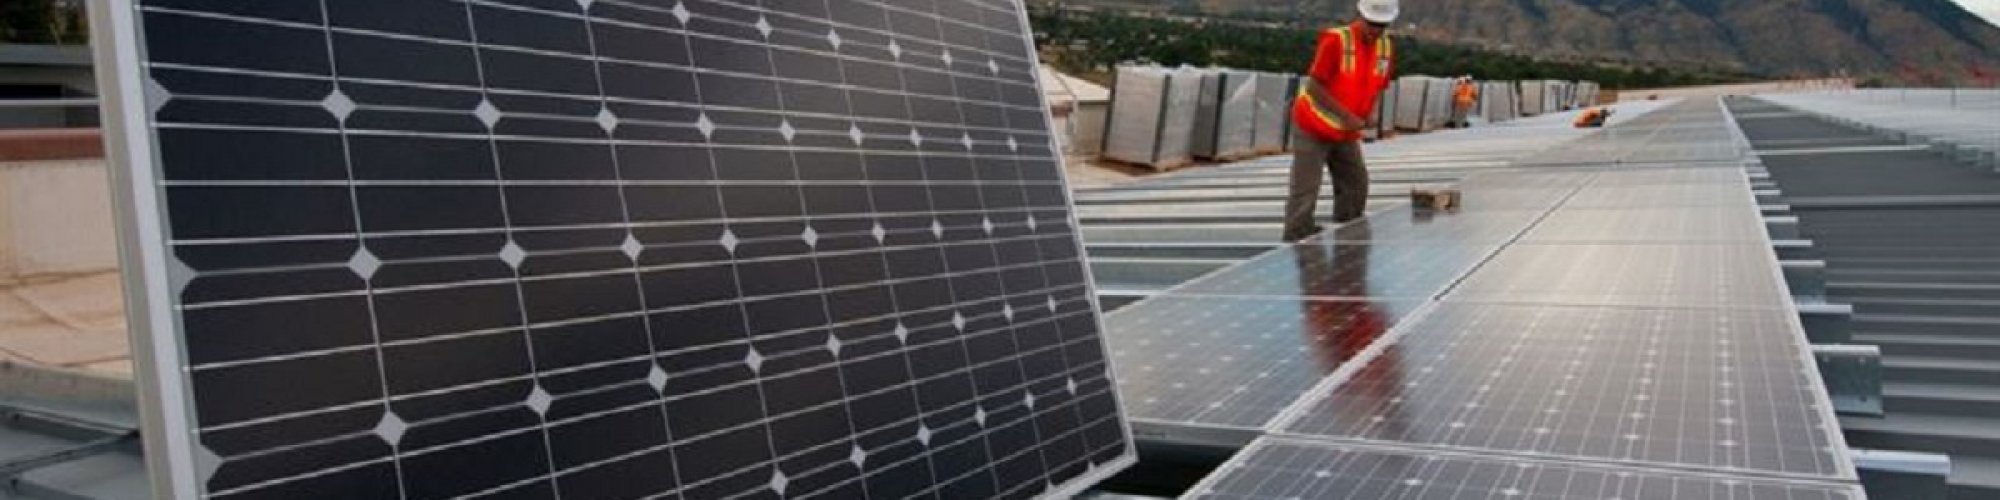 solar panel installers kent